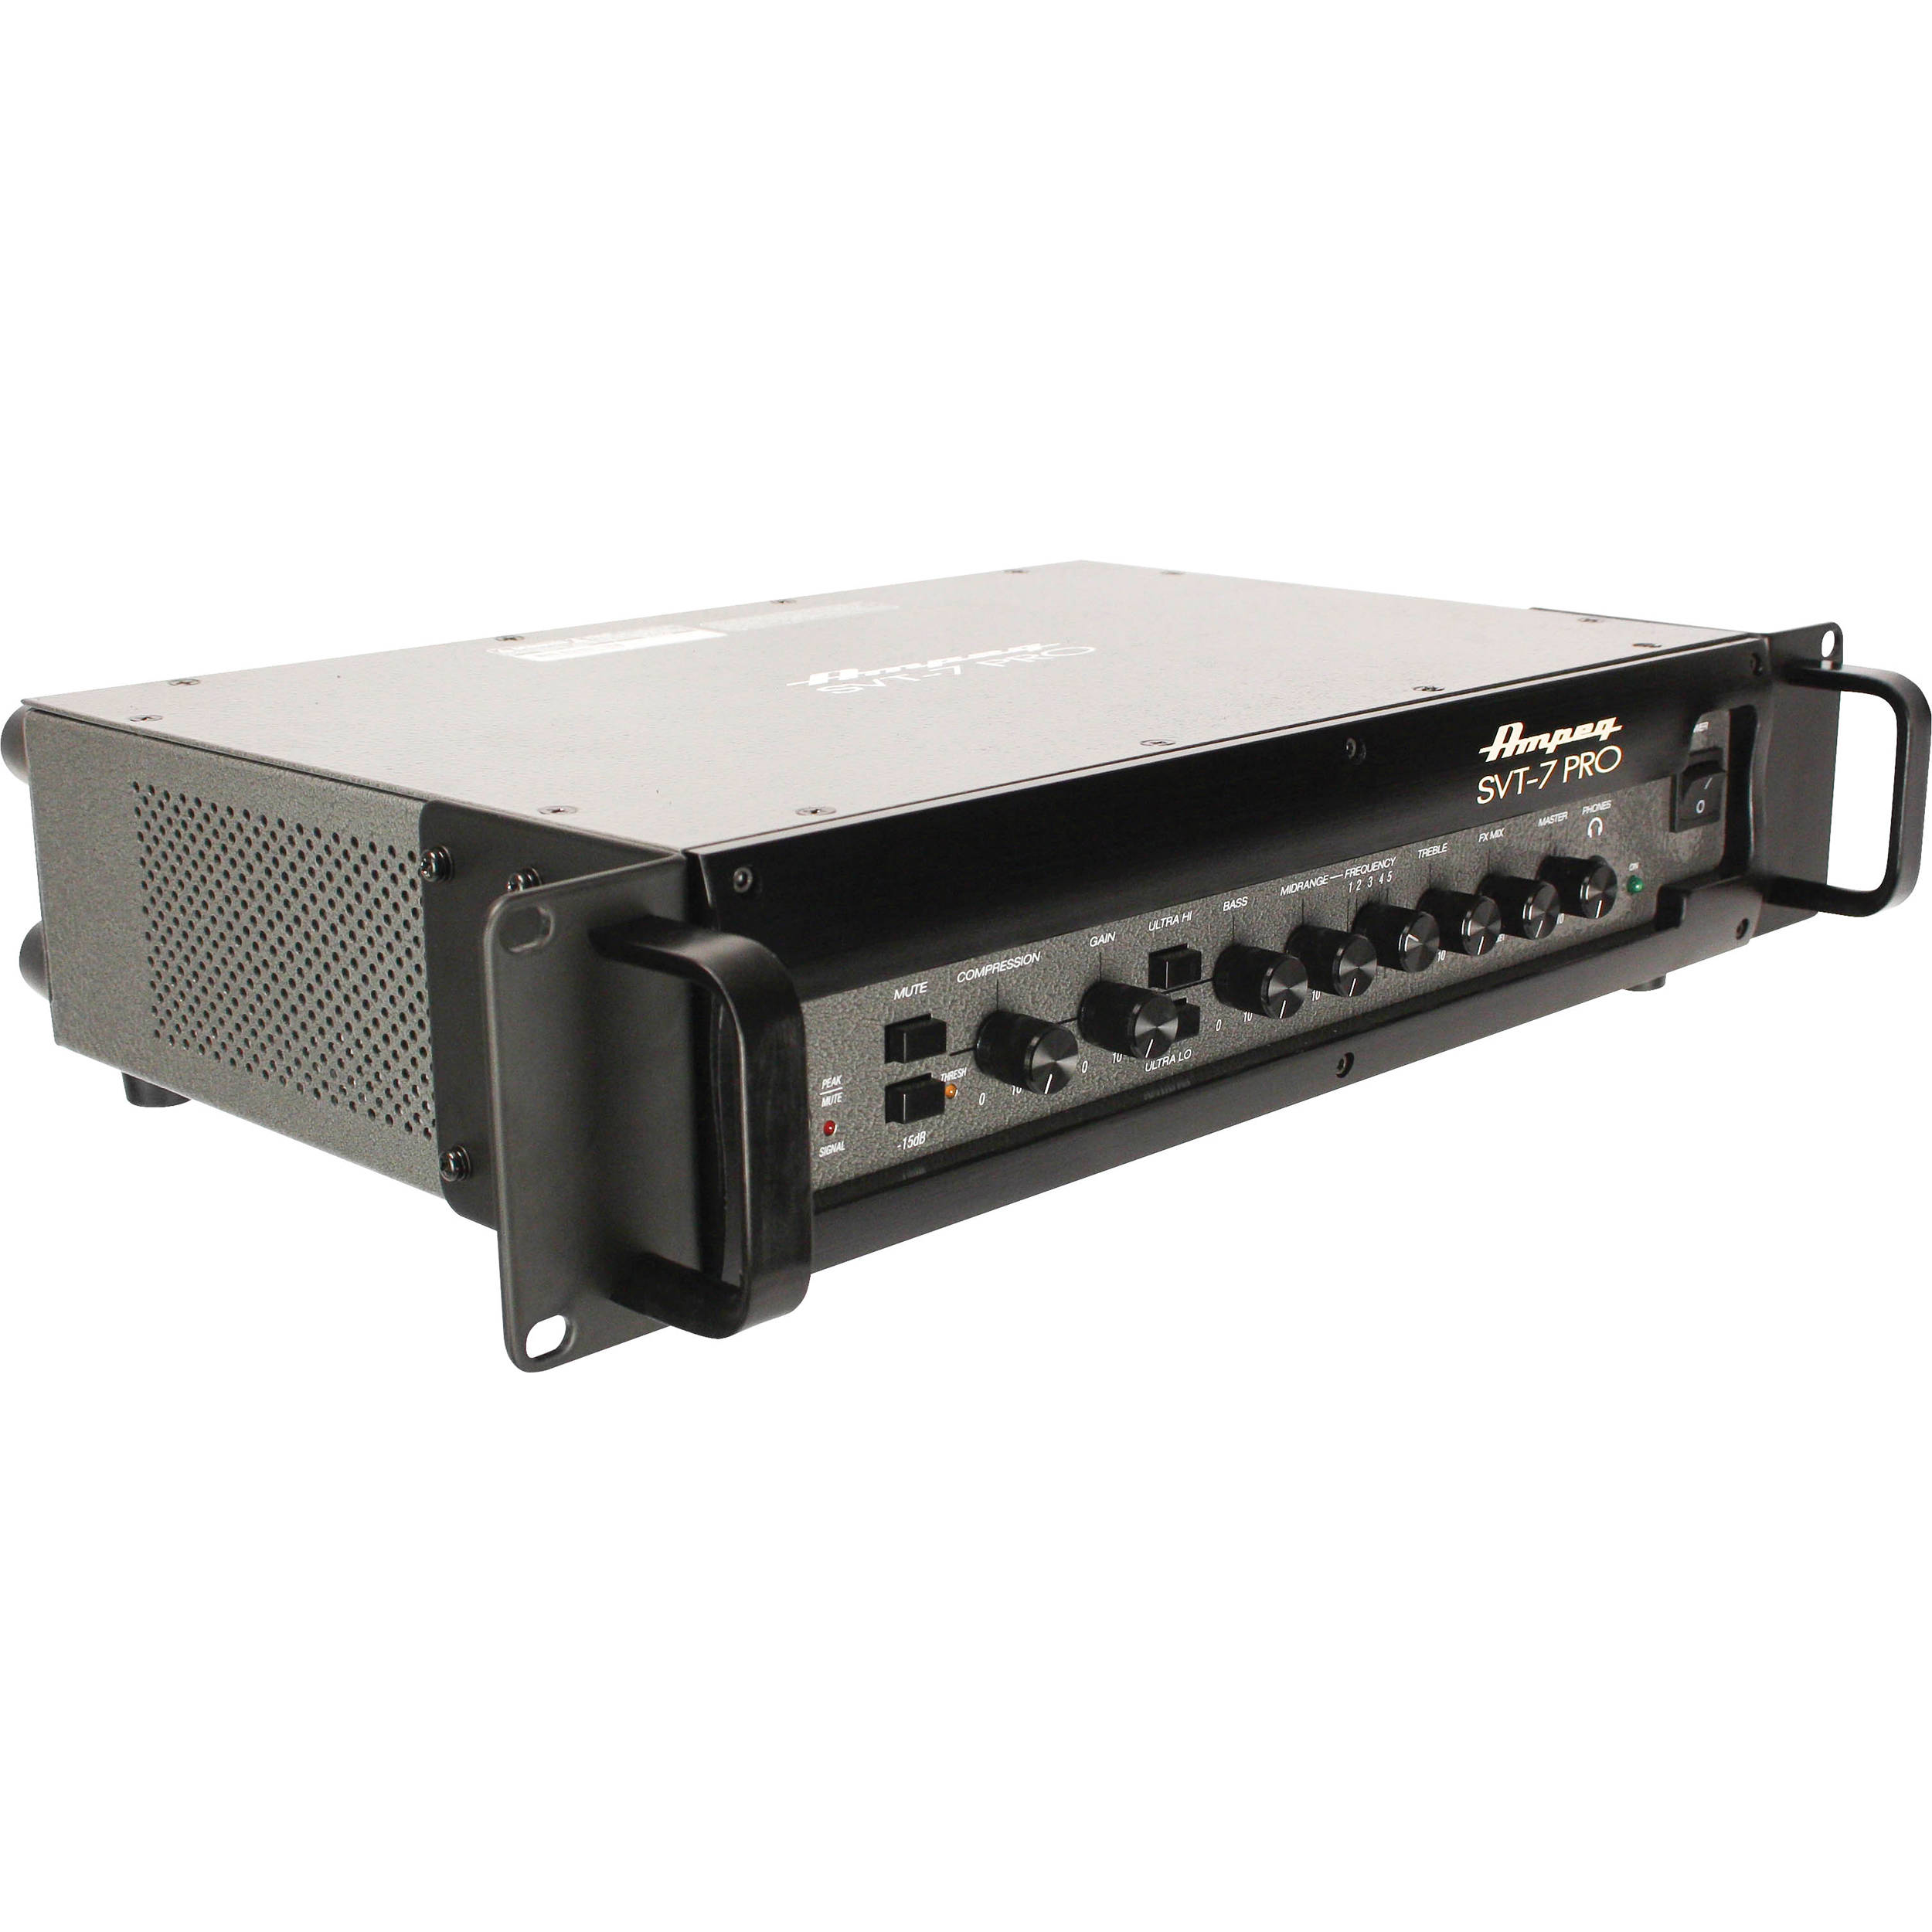 Ampeg SVT Pro 1000W HeadTube Preamp, D Class Power Amp